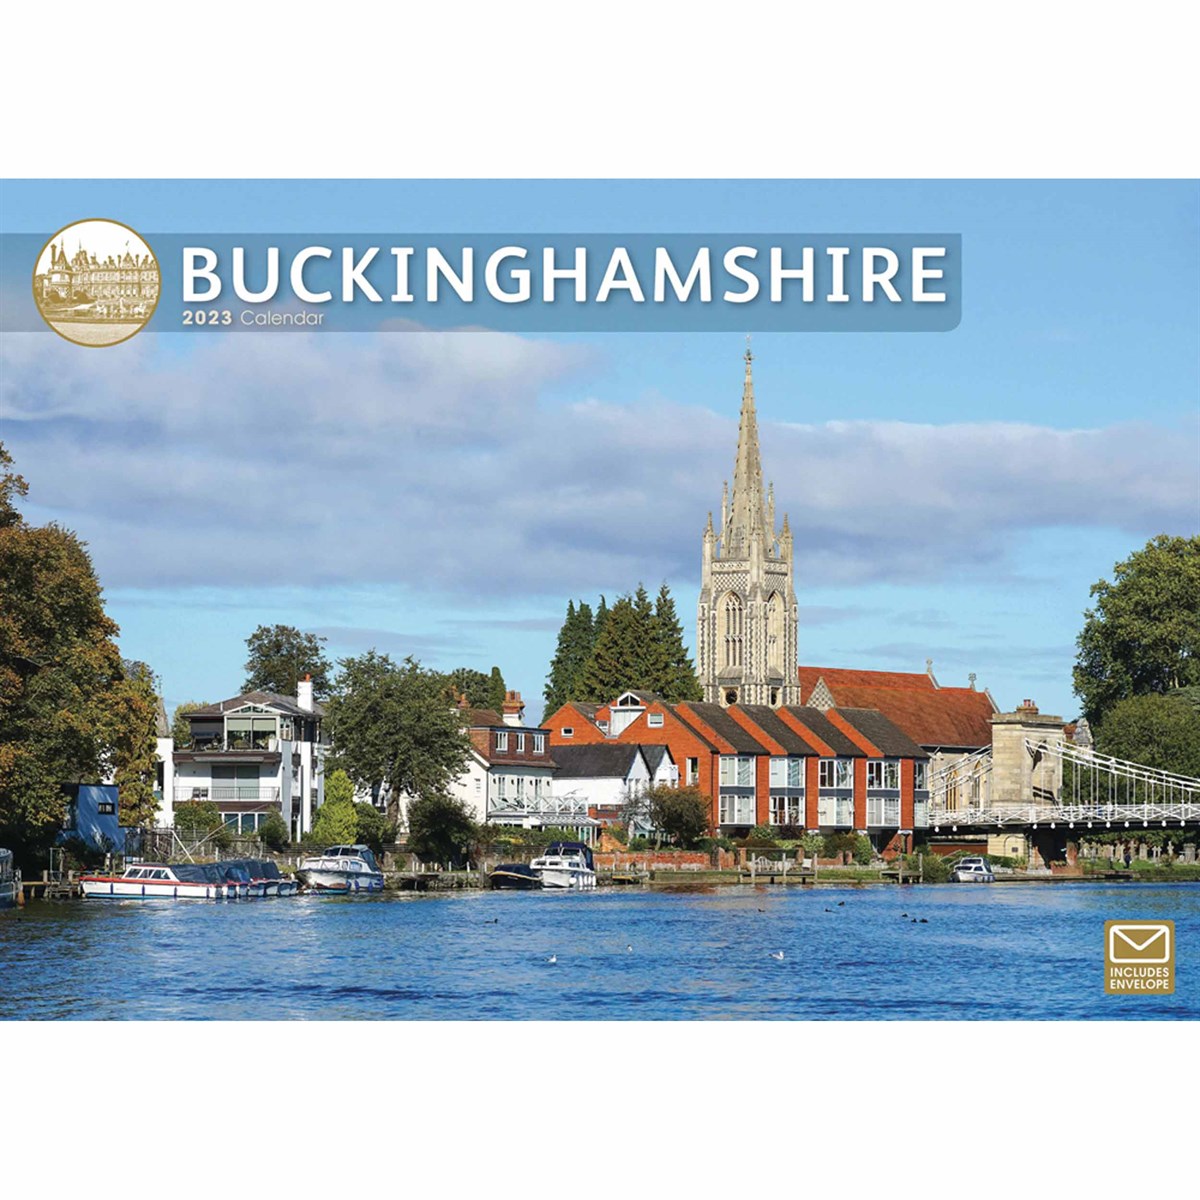 Buckinghamshire A4 2023 Calendars